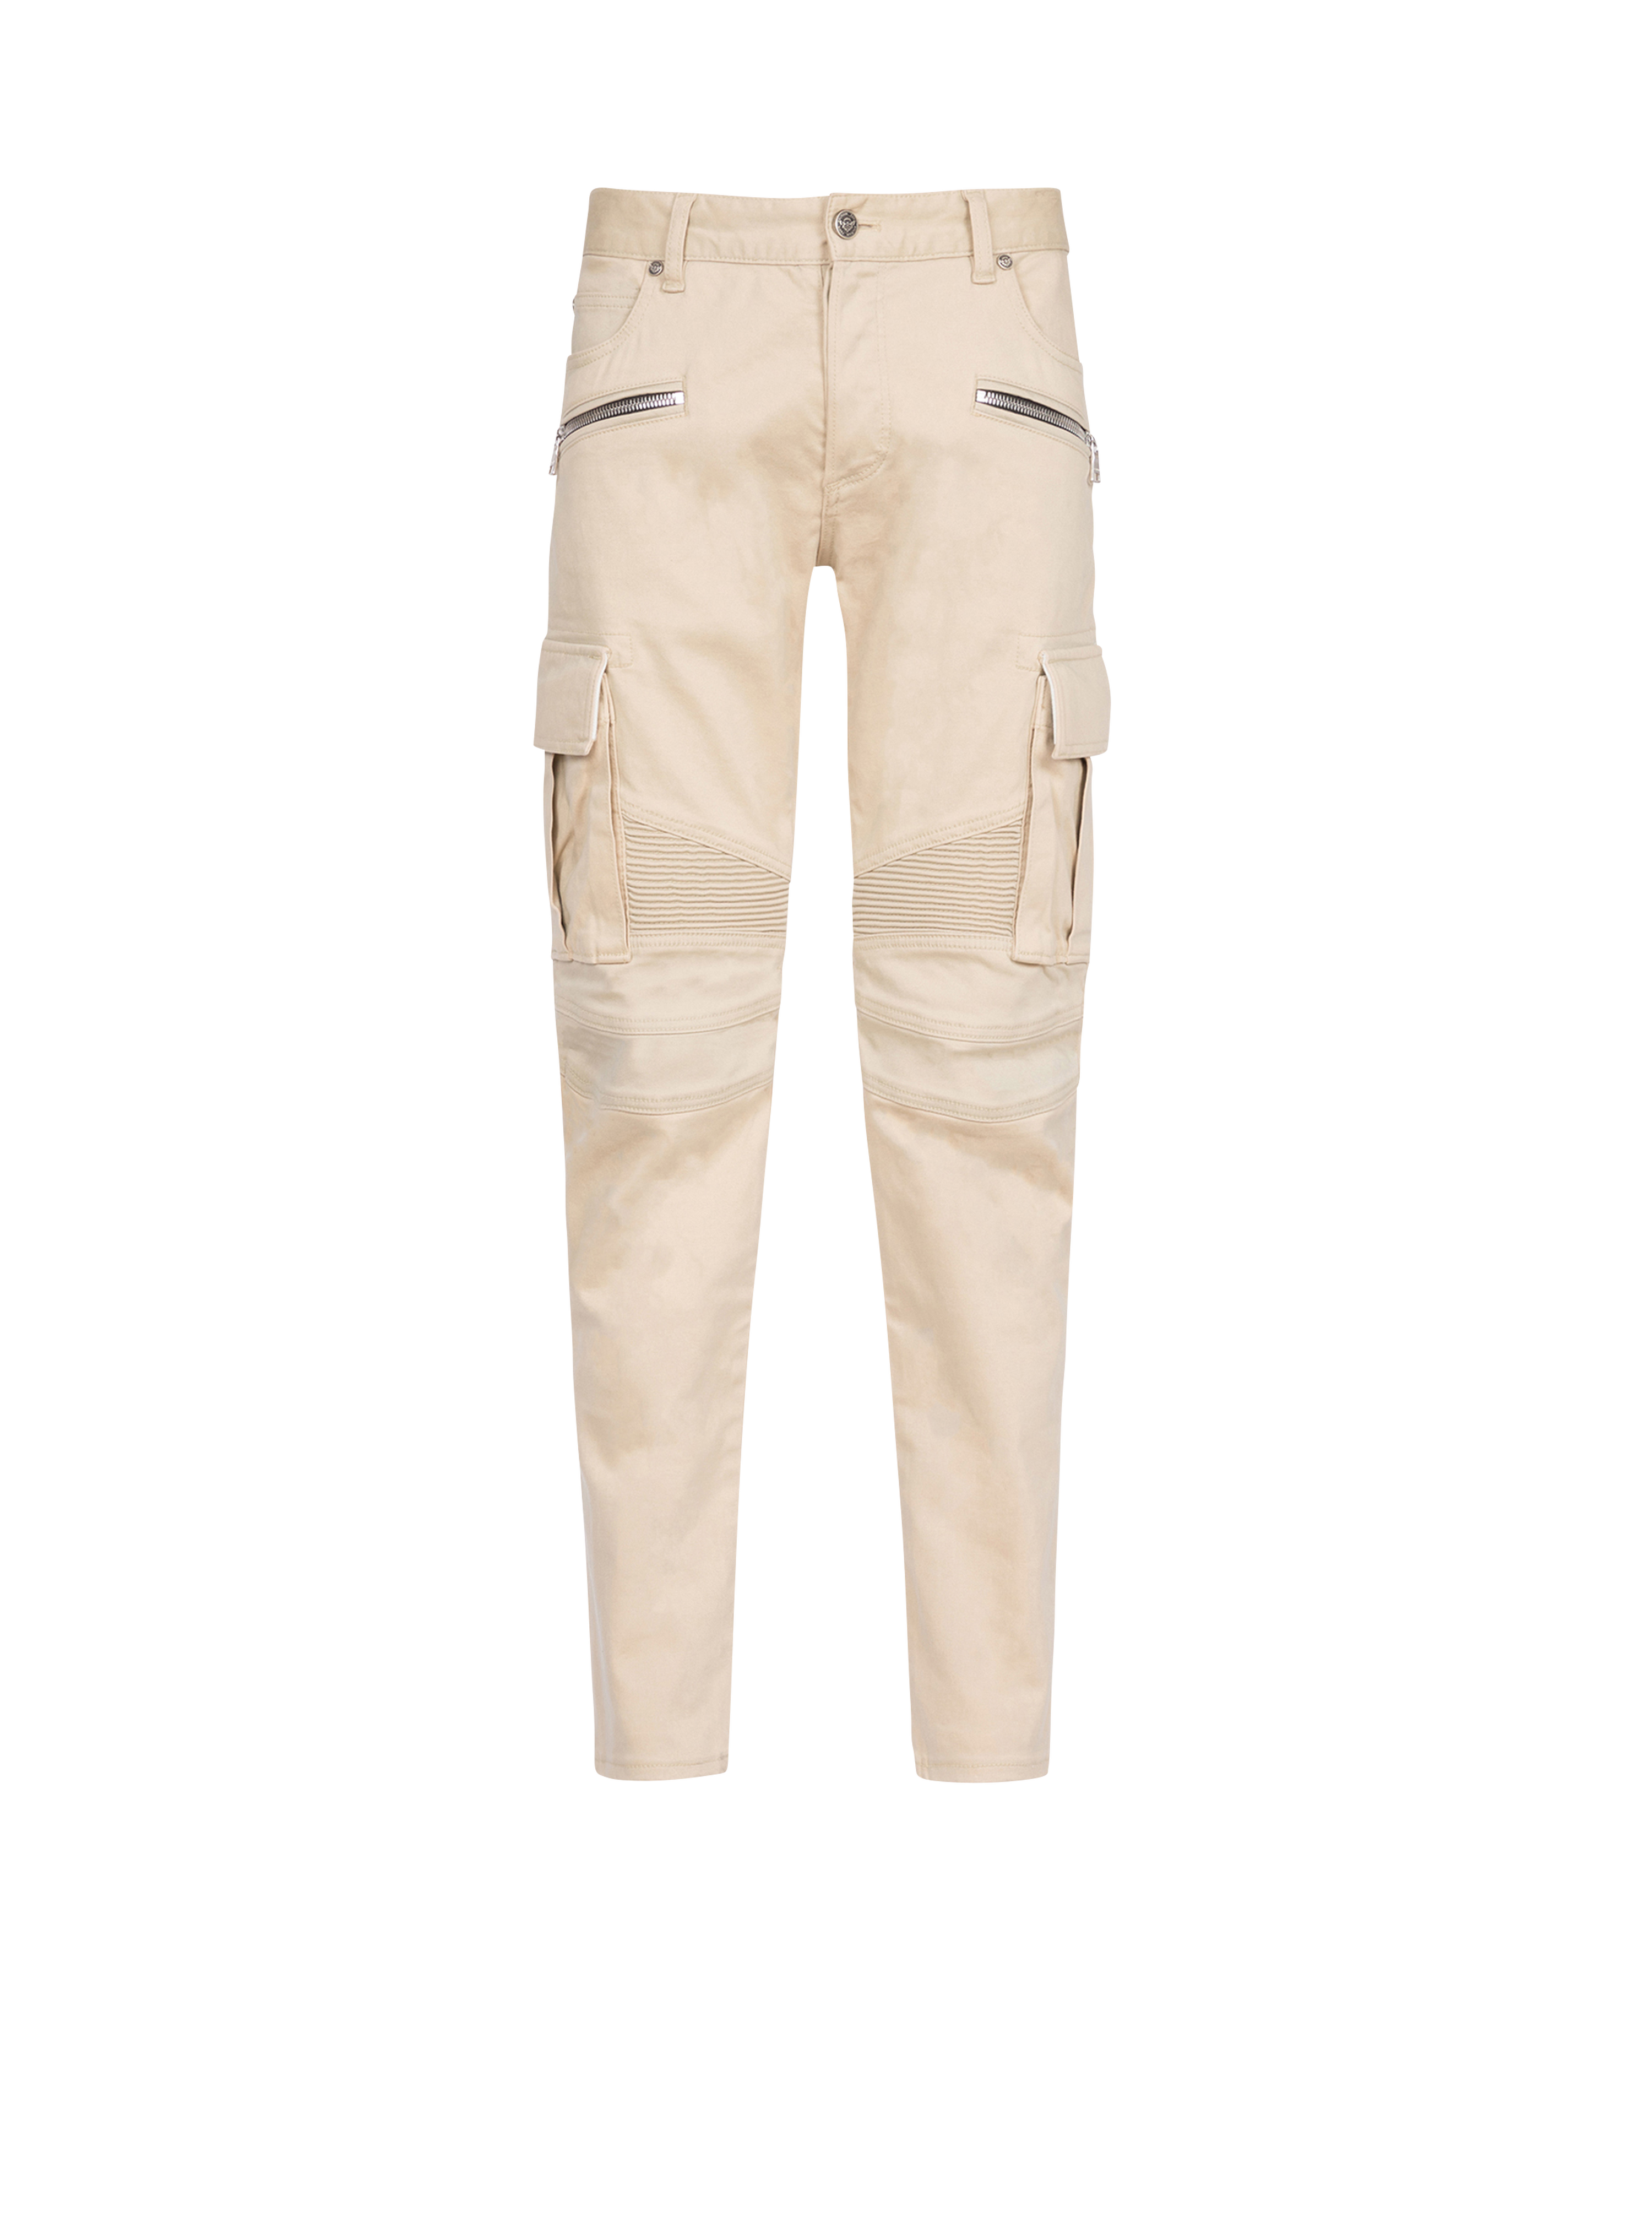 Cotton cargo pants, beige